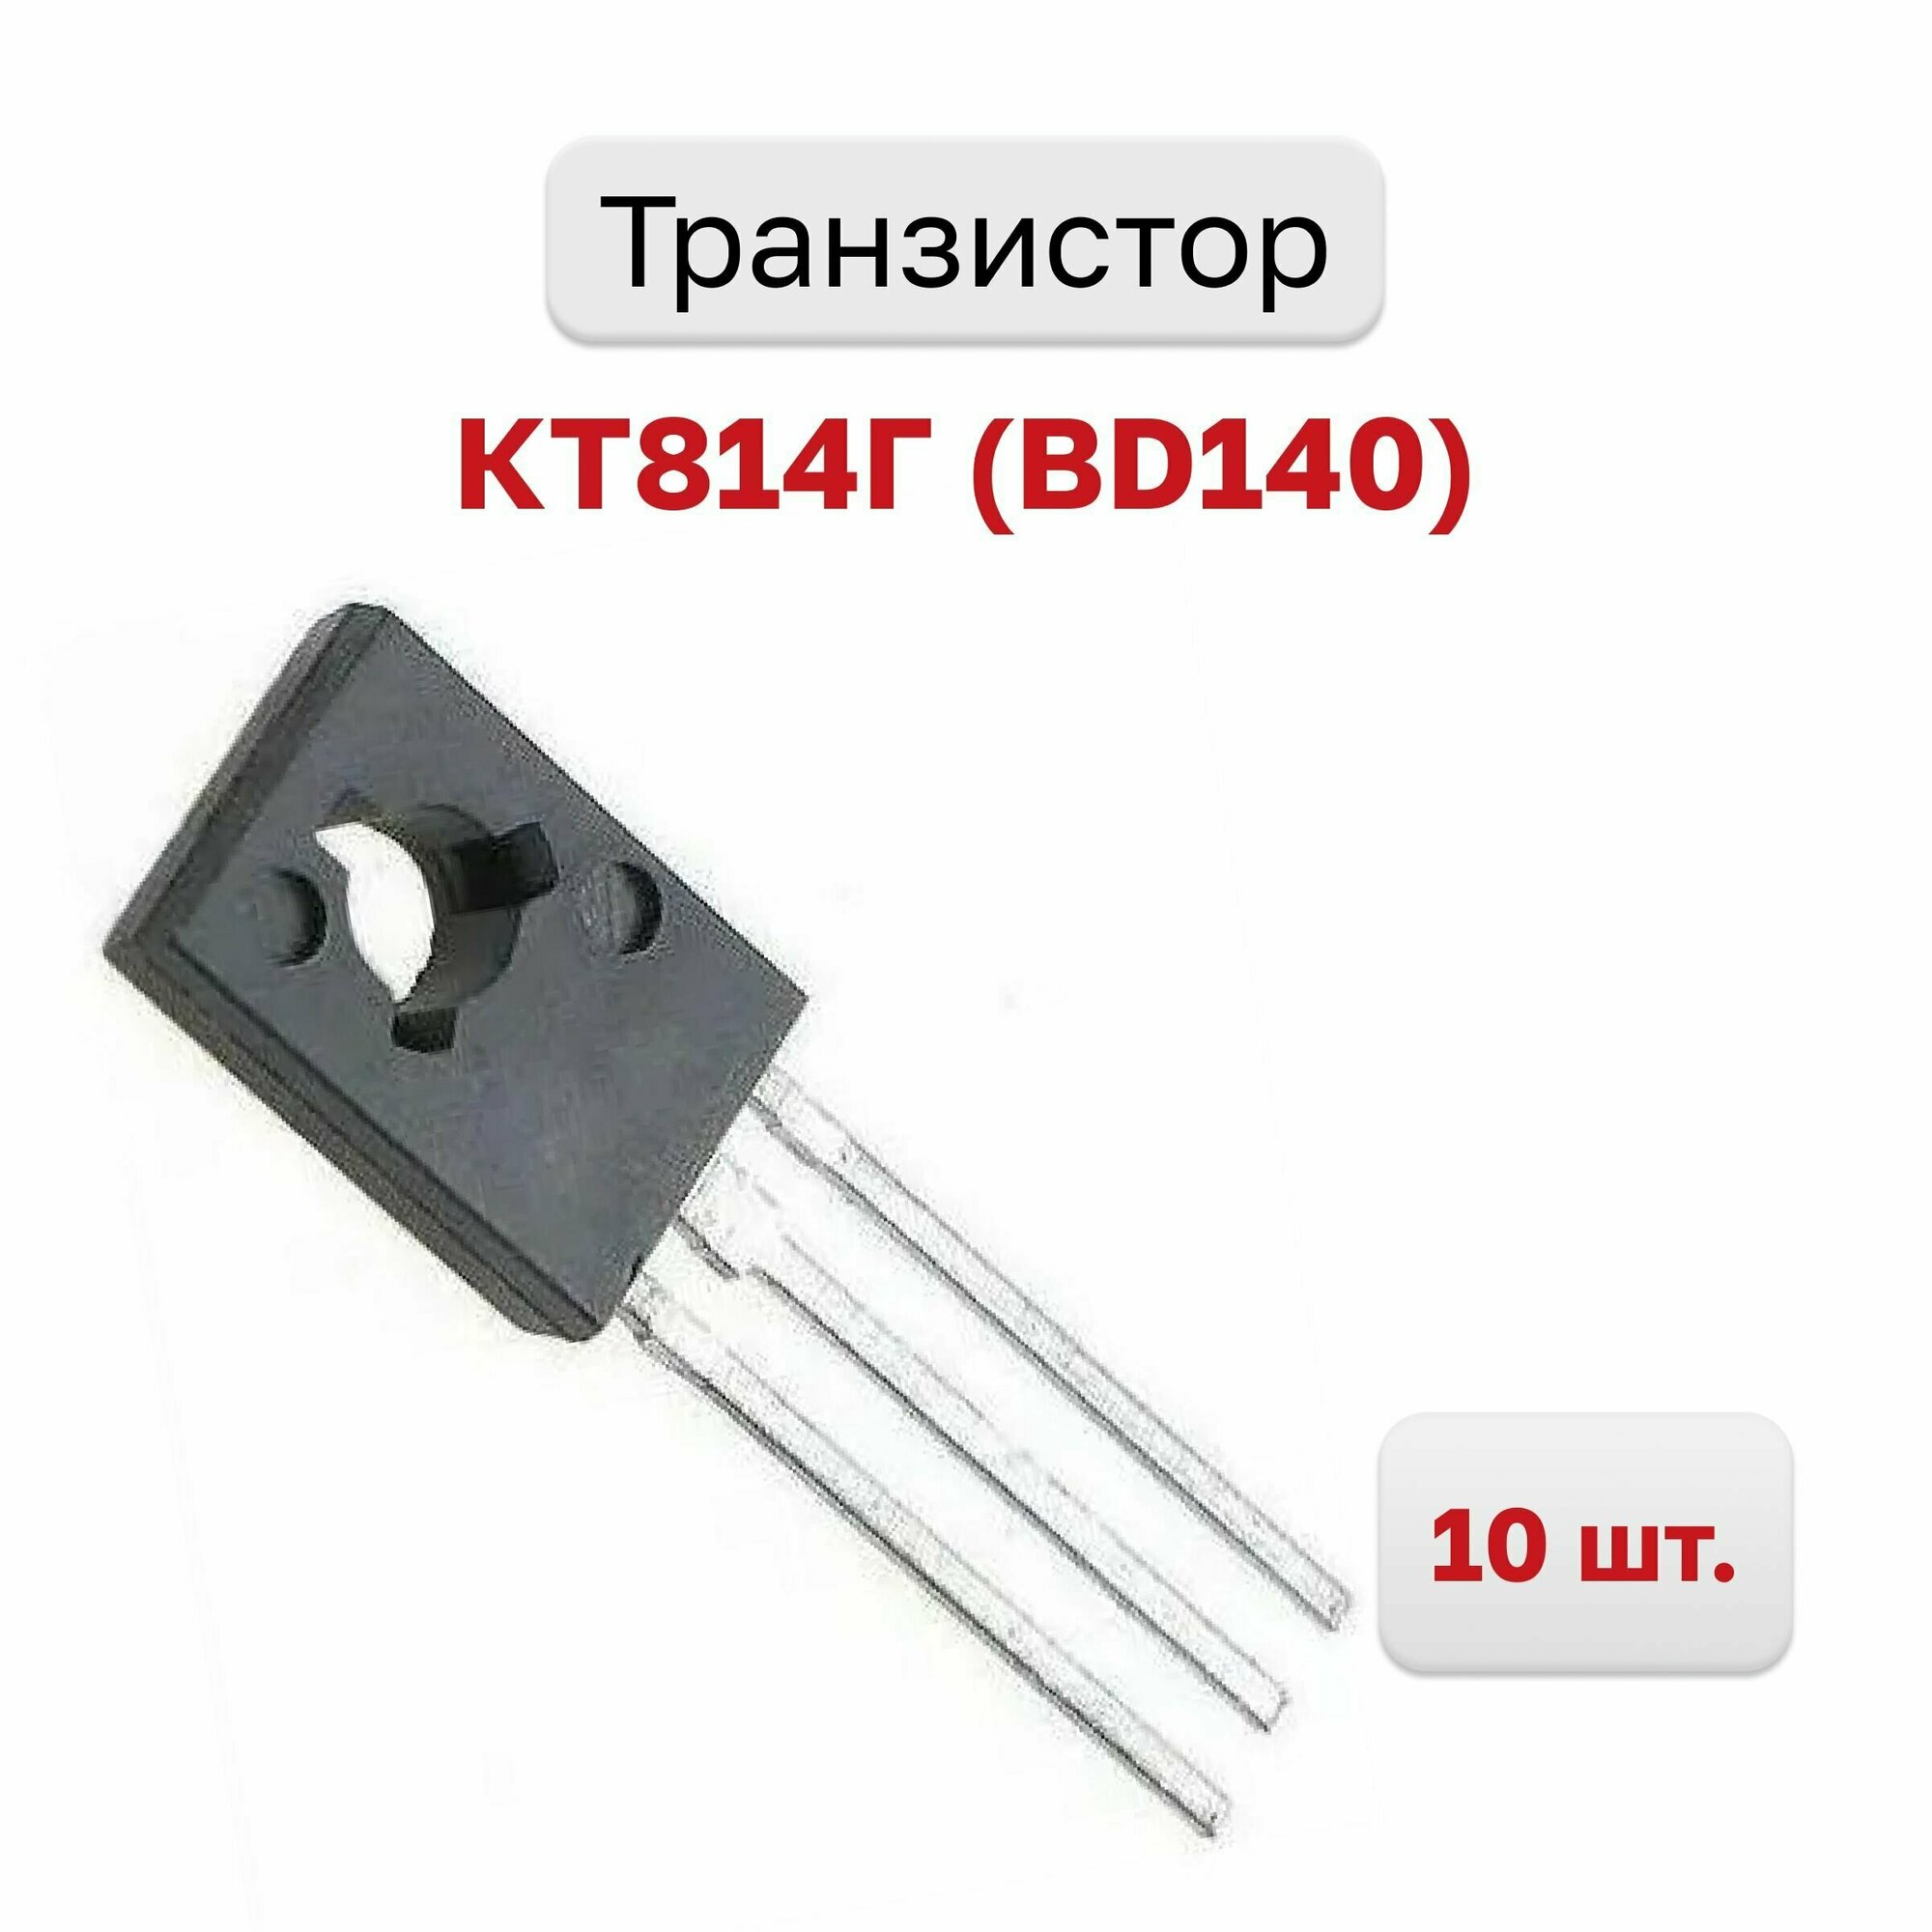 Транзистор КТ814Г (BD140), 10 шт.